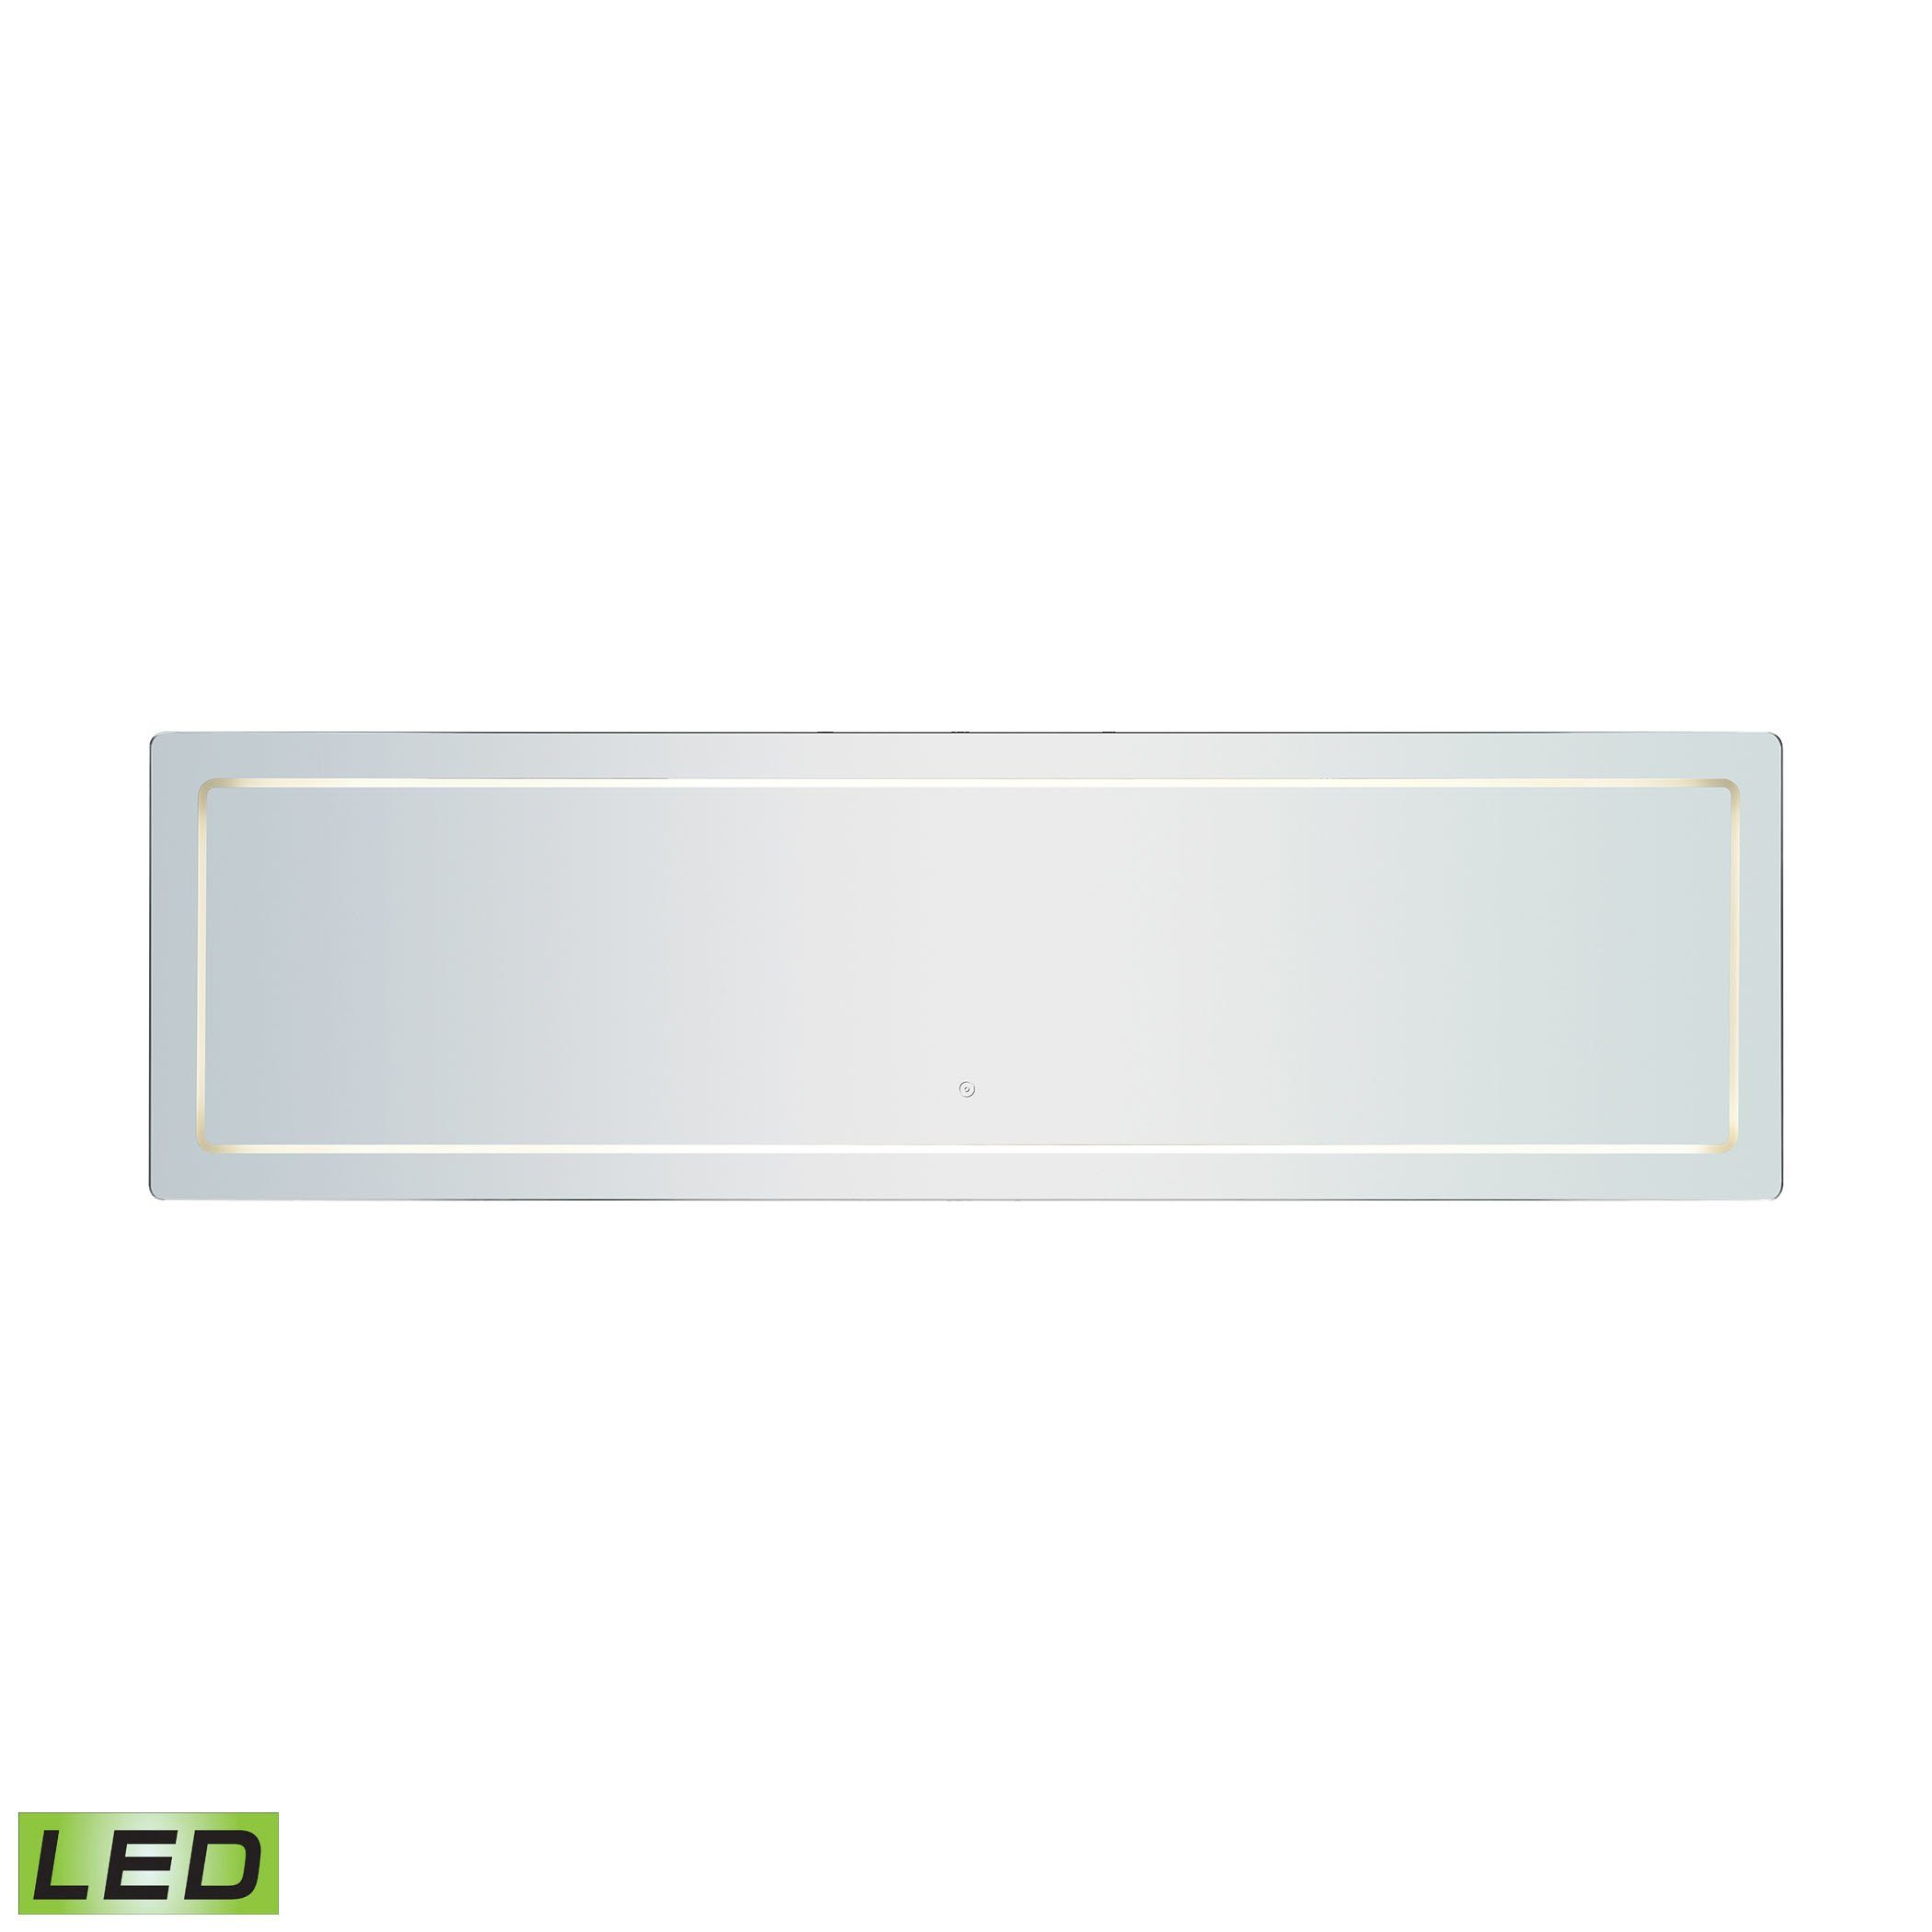 20x70-inch Full-Length LED Mirror Mirrors Ryvyr 